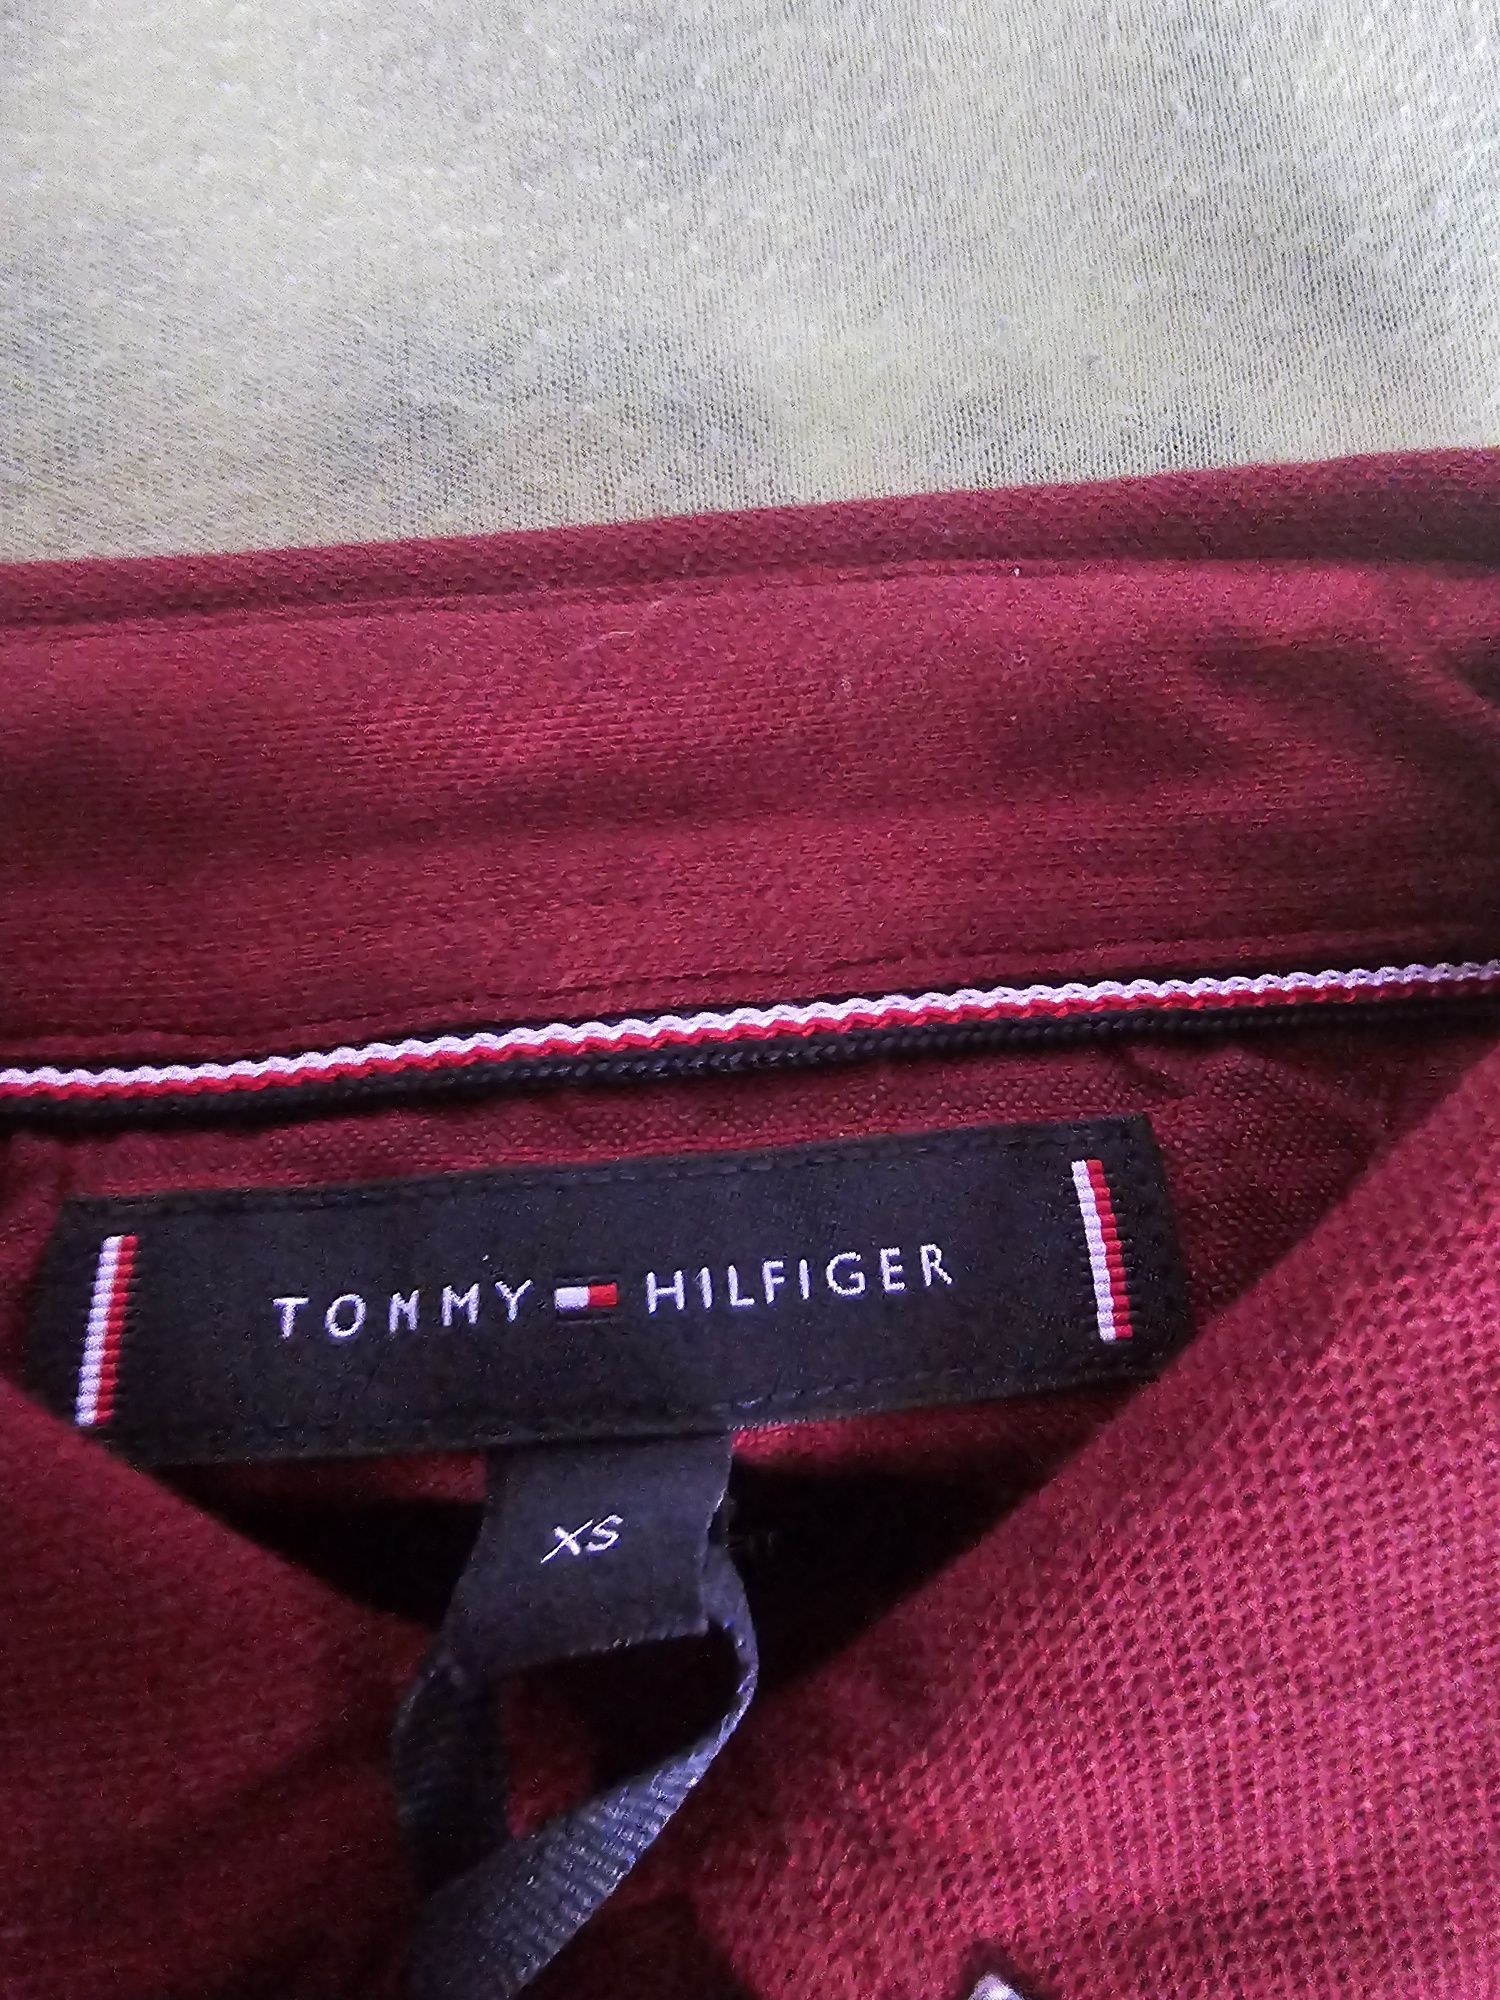 Bluza Tommy hilfiger xs  / original /nou